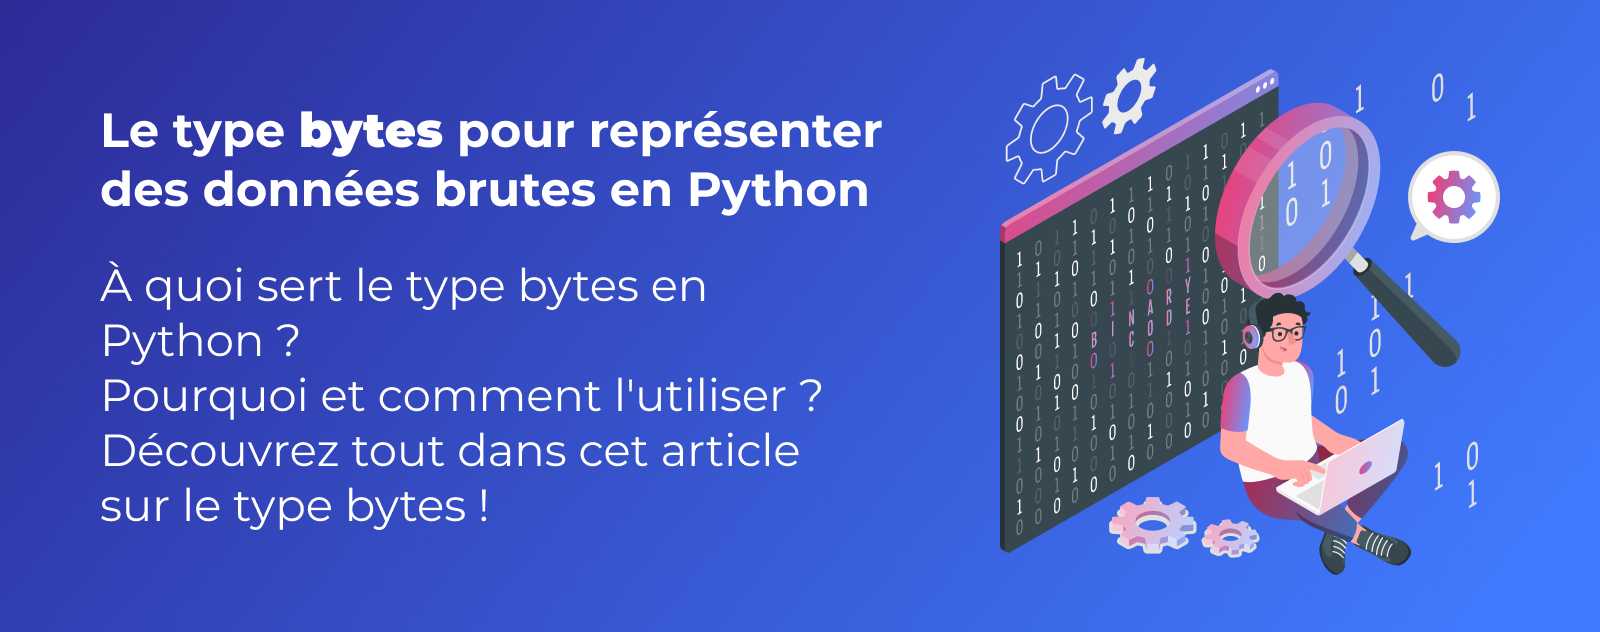 Le type "bytes" en Python